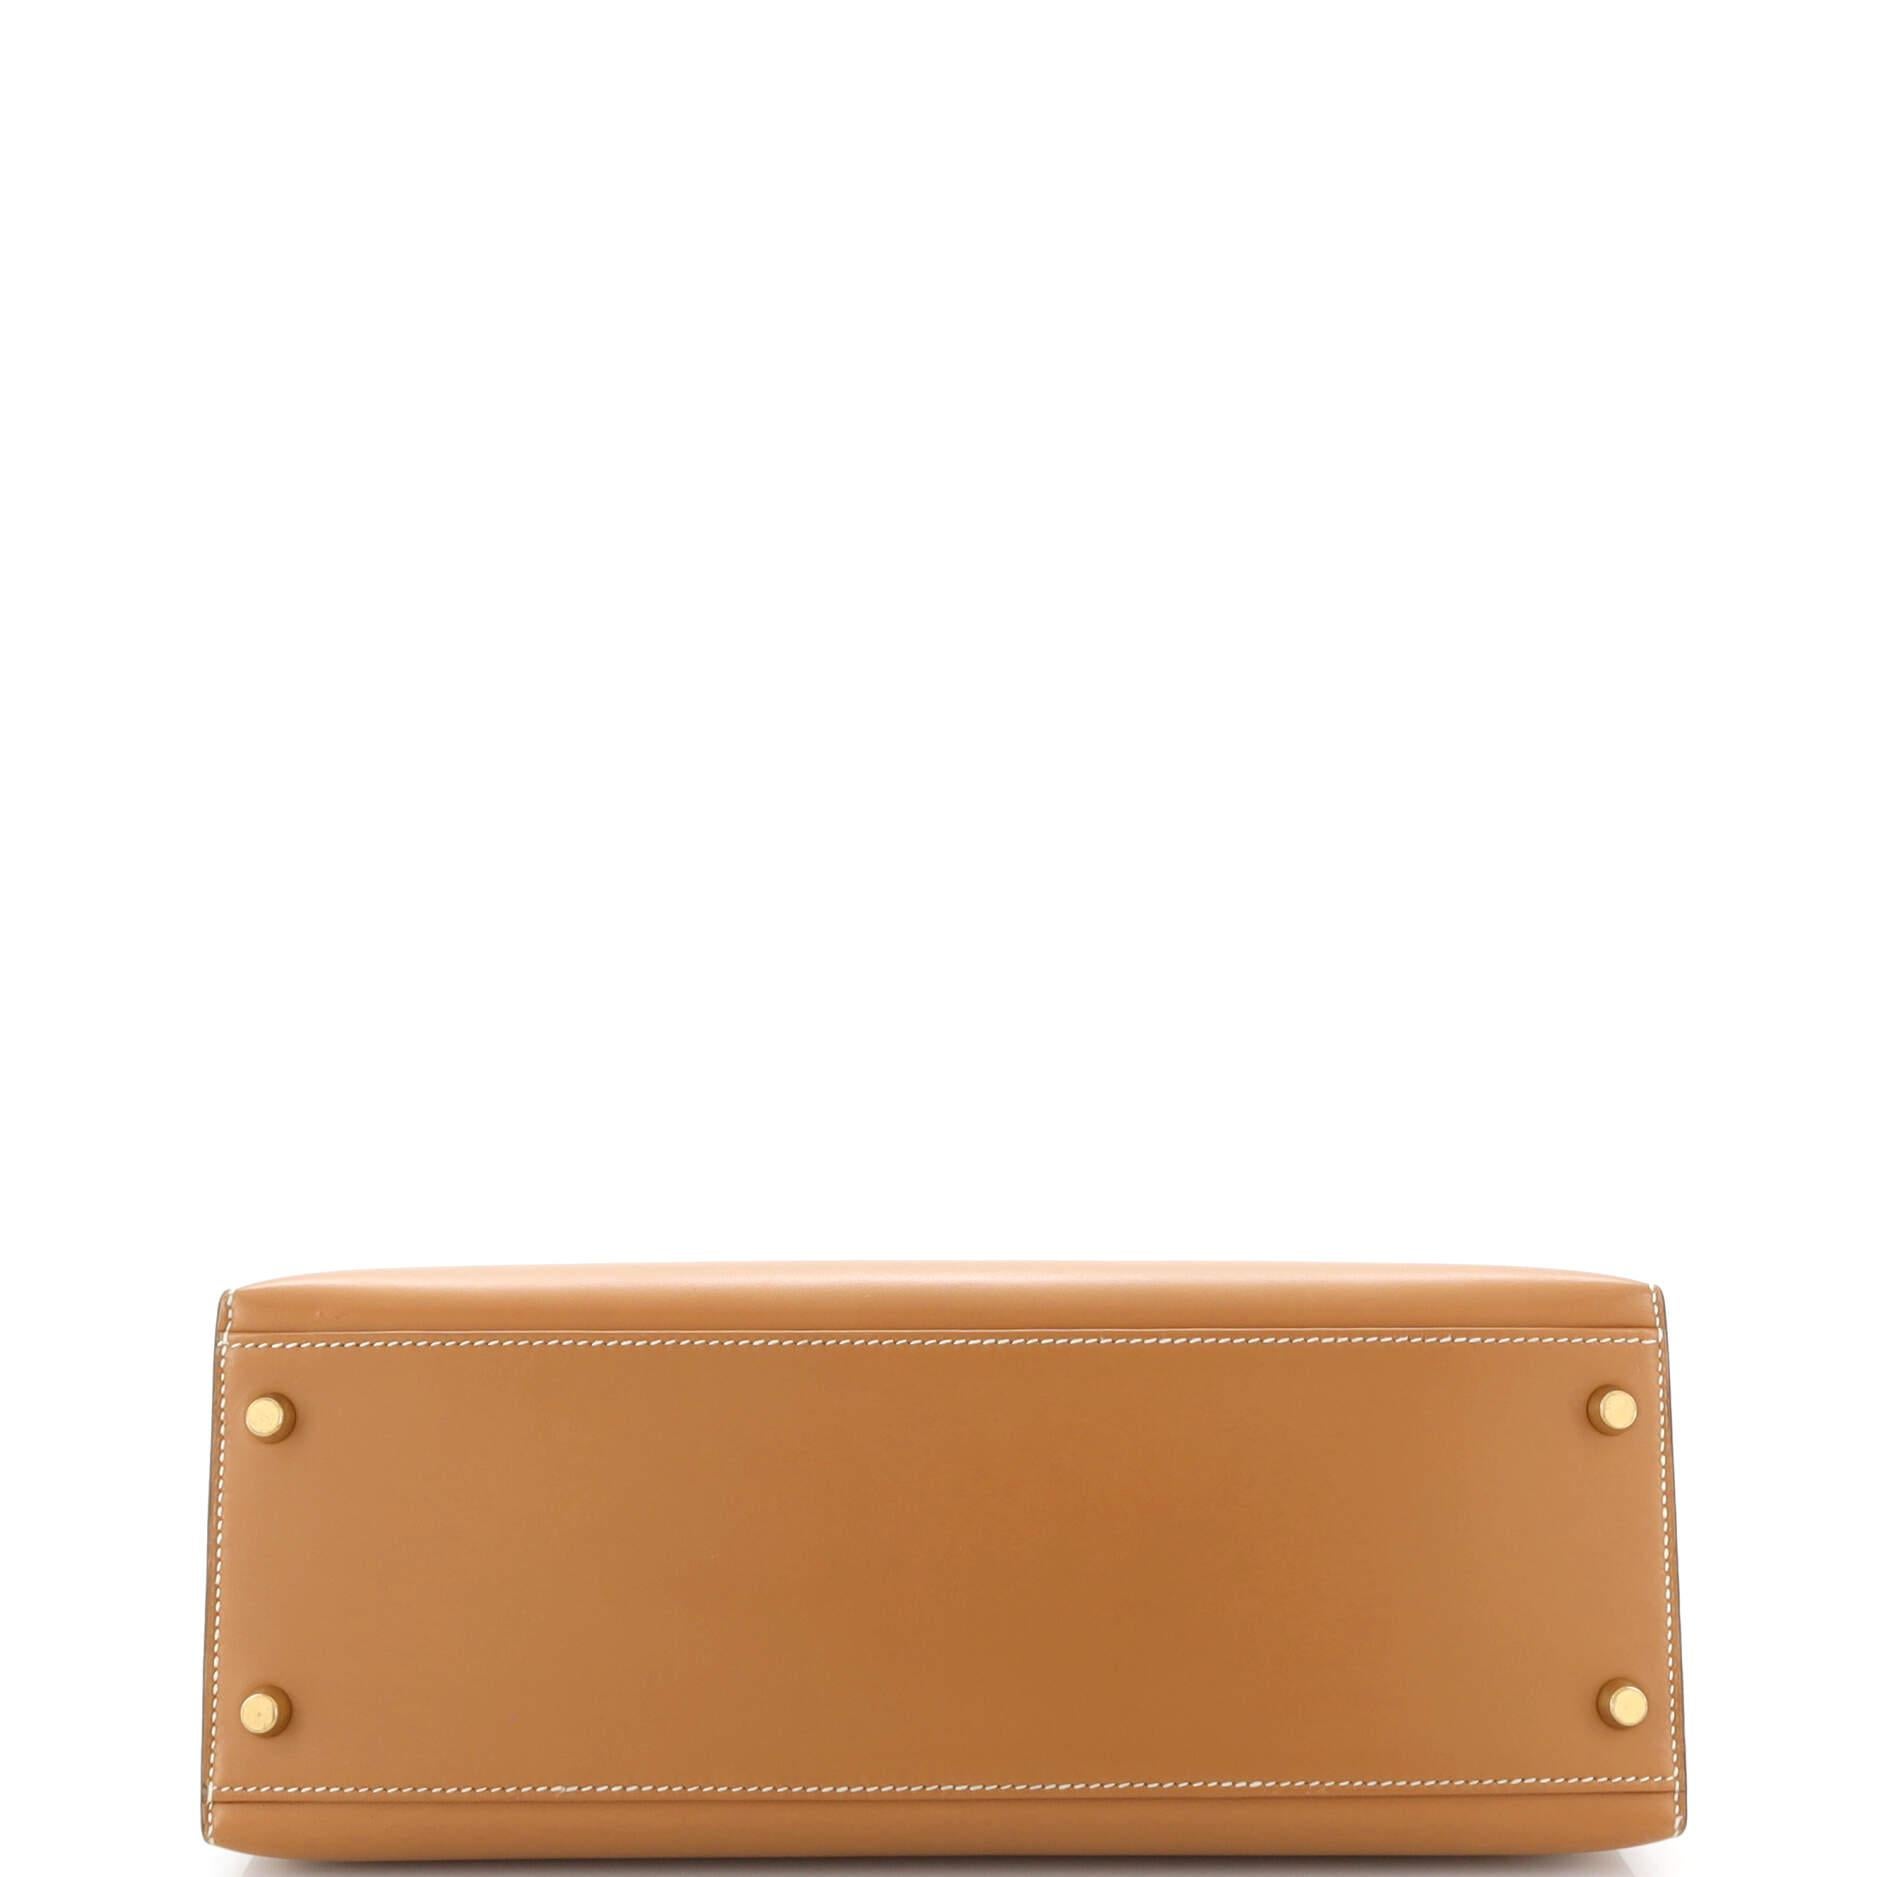 Hermes Kelly Handbag Natural Chamonix with Gold Hardware 32 1